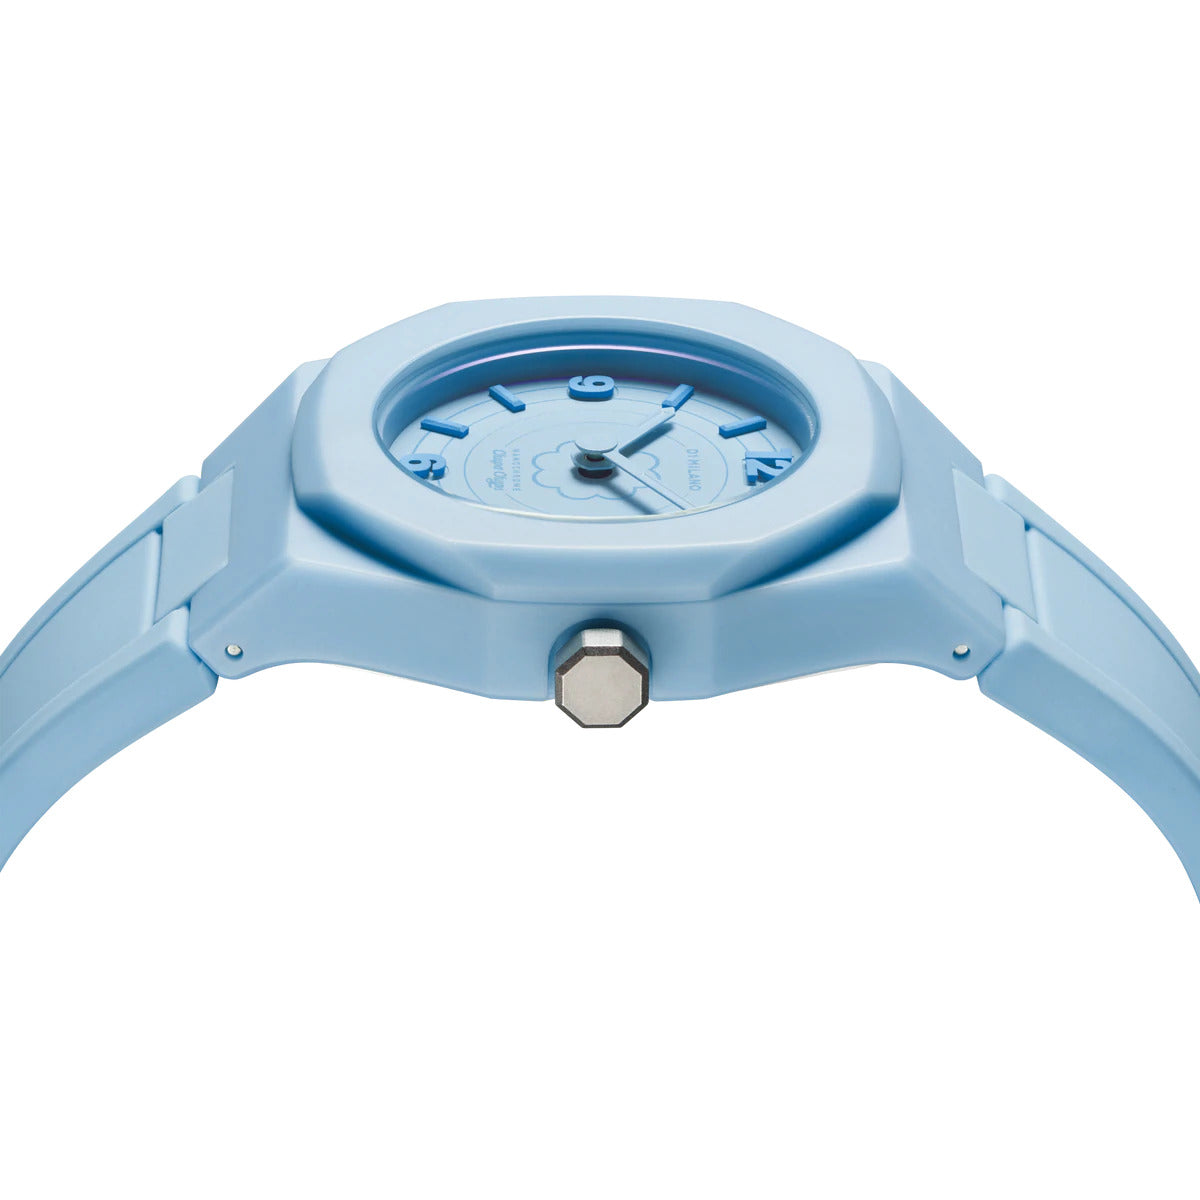 D1 Milano Quartz Watch with Blue Dial - ML-0260